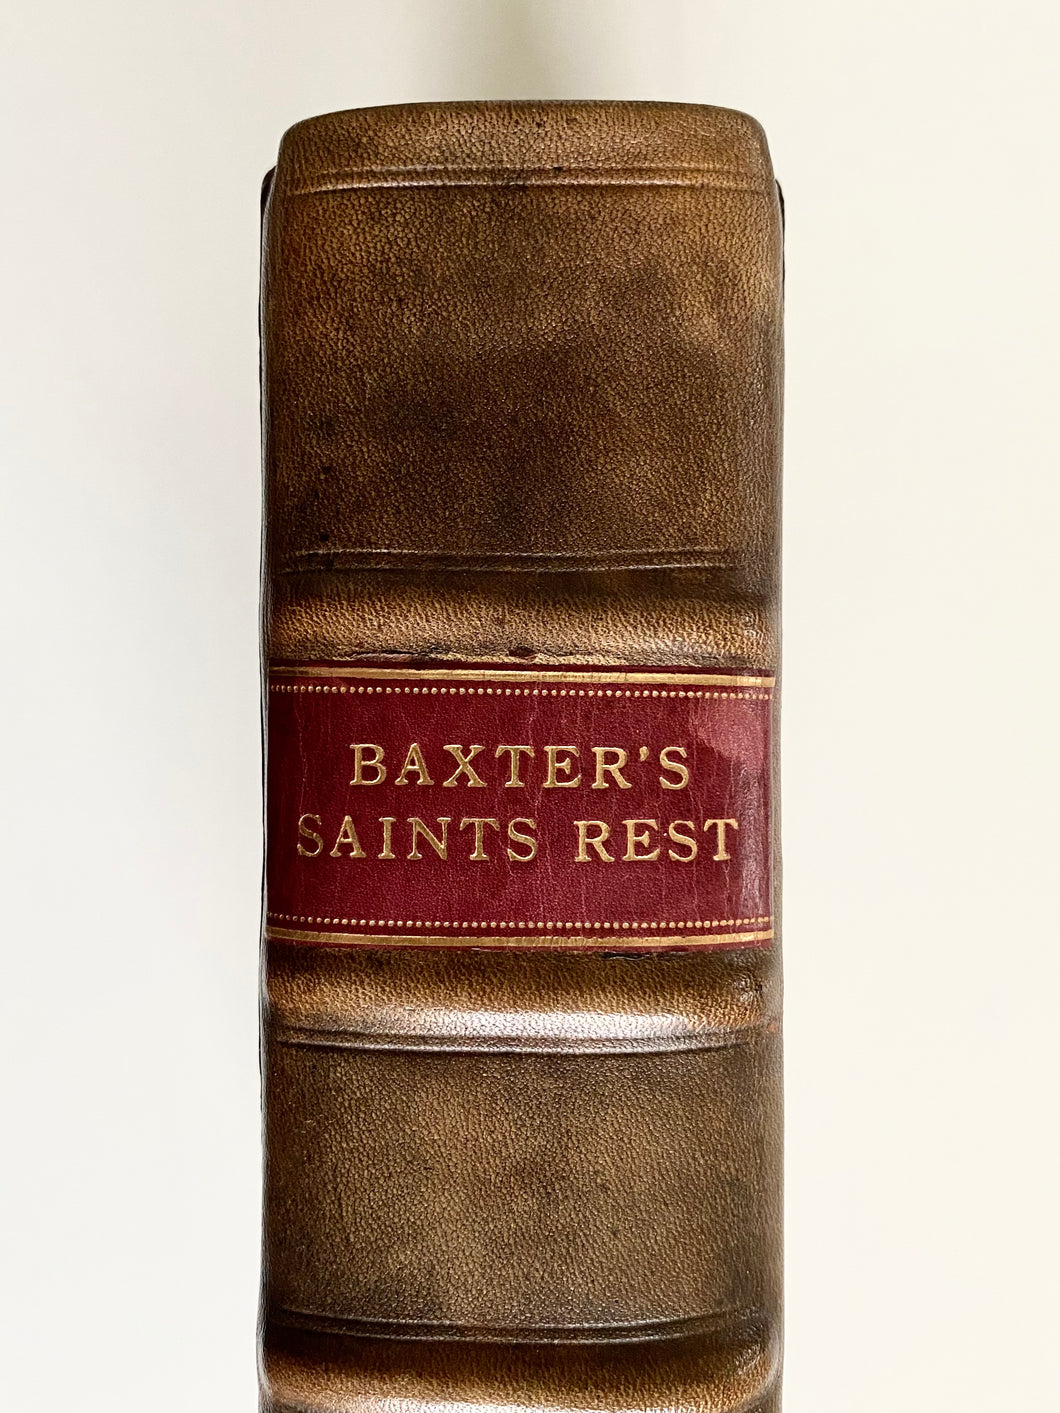 1688 RICHARD BAXTER. An Unpublished Manuscript Hymne Written Shortly before His Death.